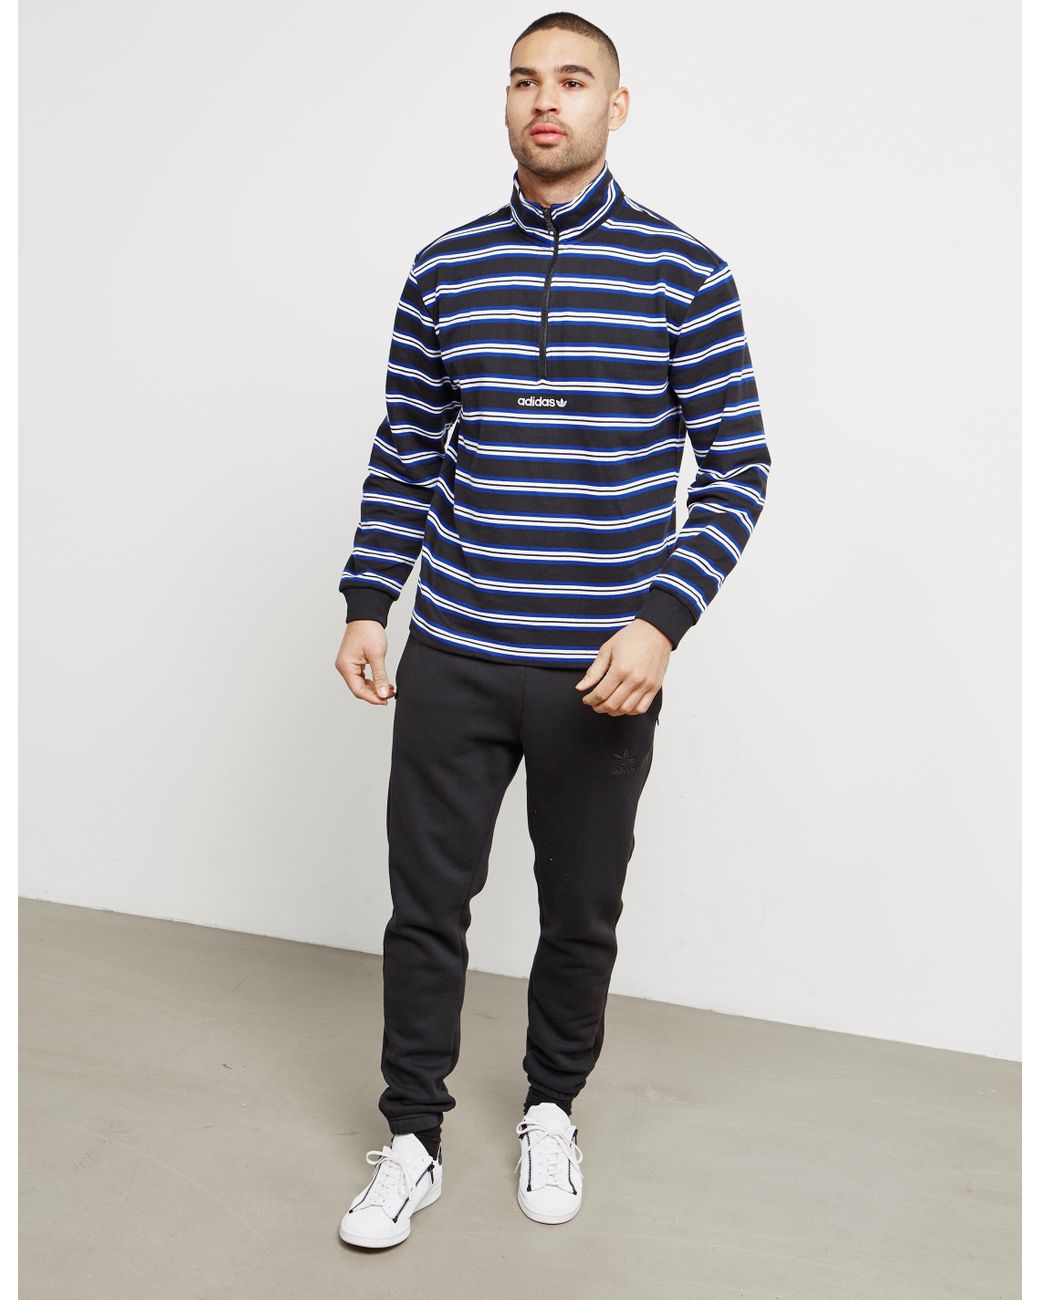 adidas Originals Mens St. Peter Half Zip Sweatshirt Black/blue/white for  Men | Lyst